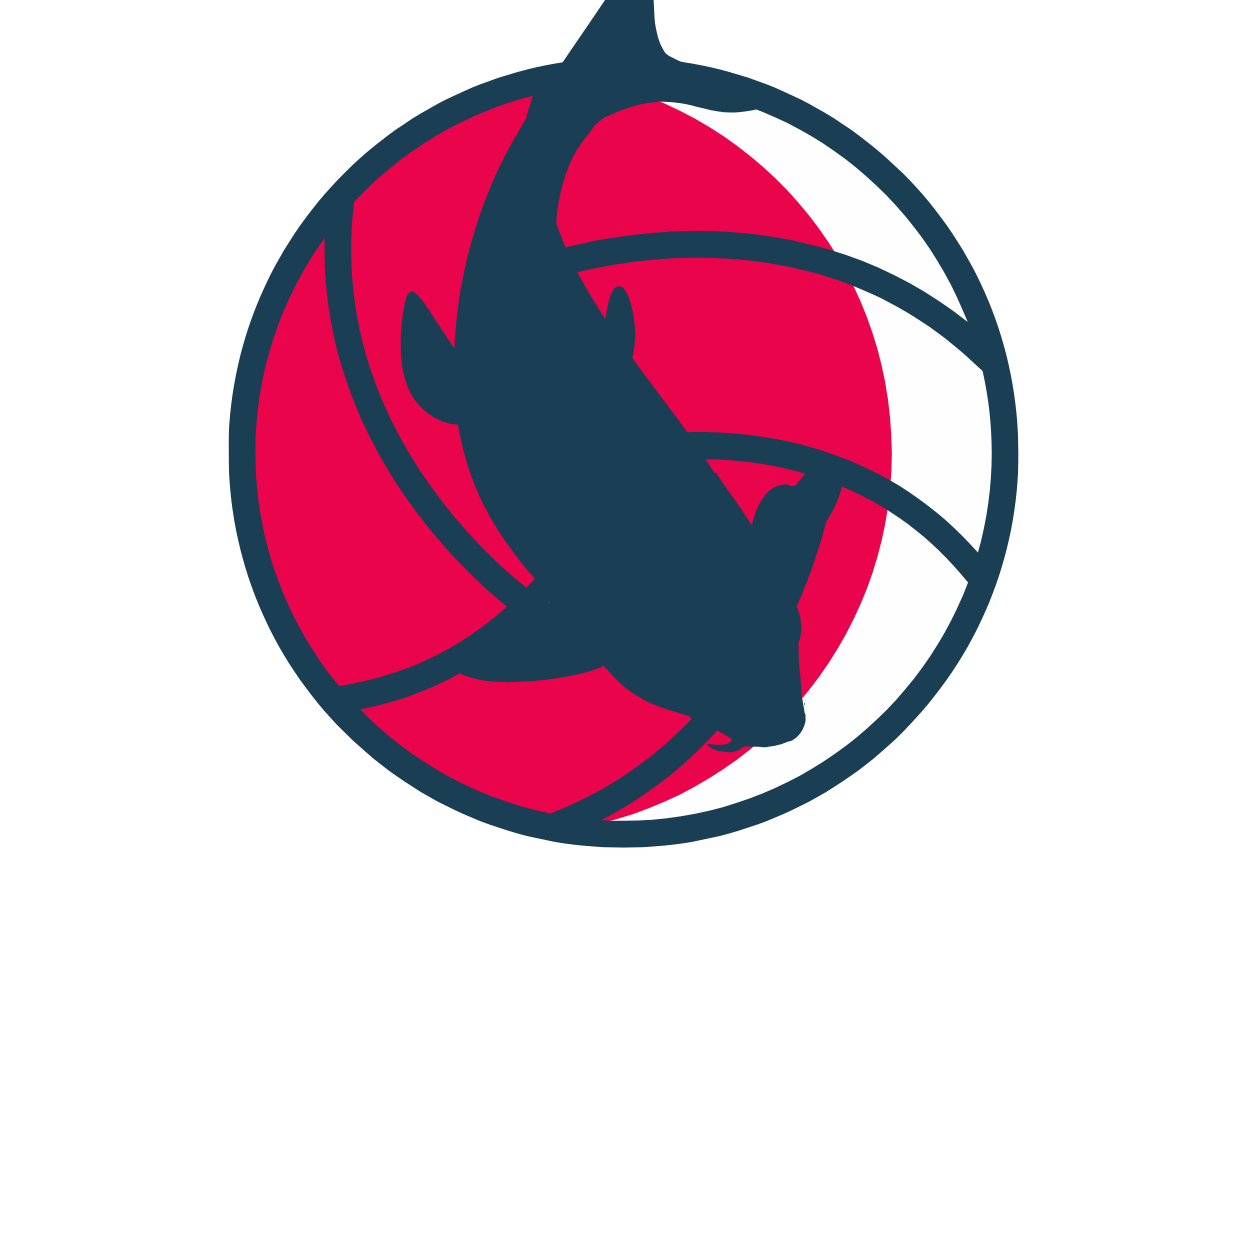 NYON NETBALL CLUB